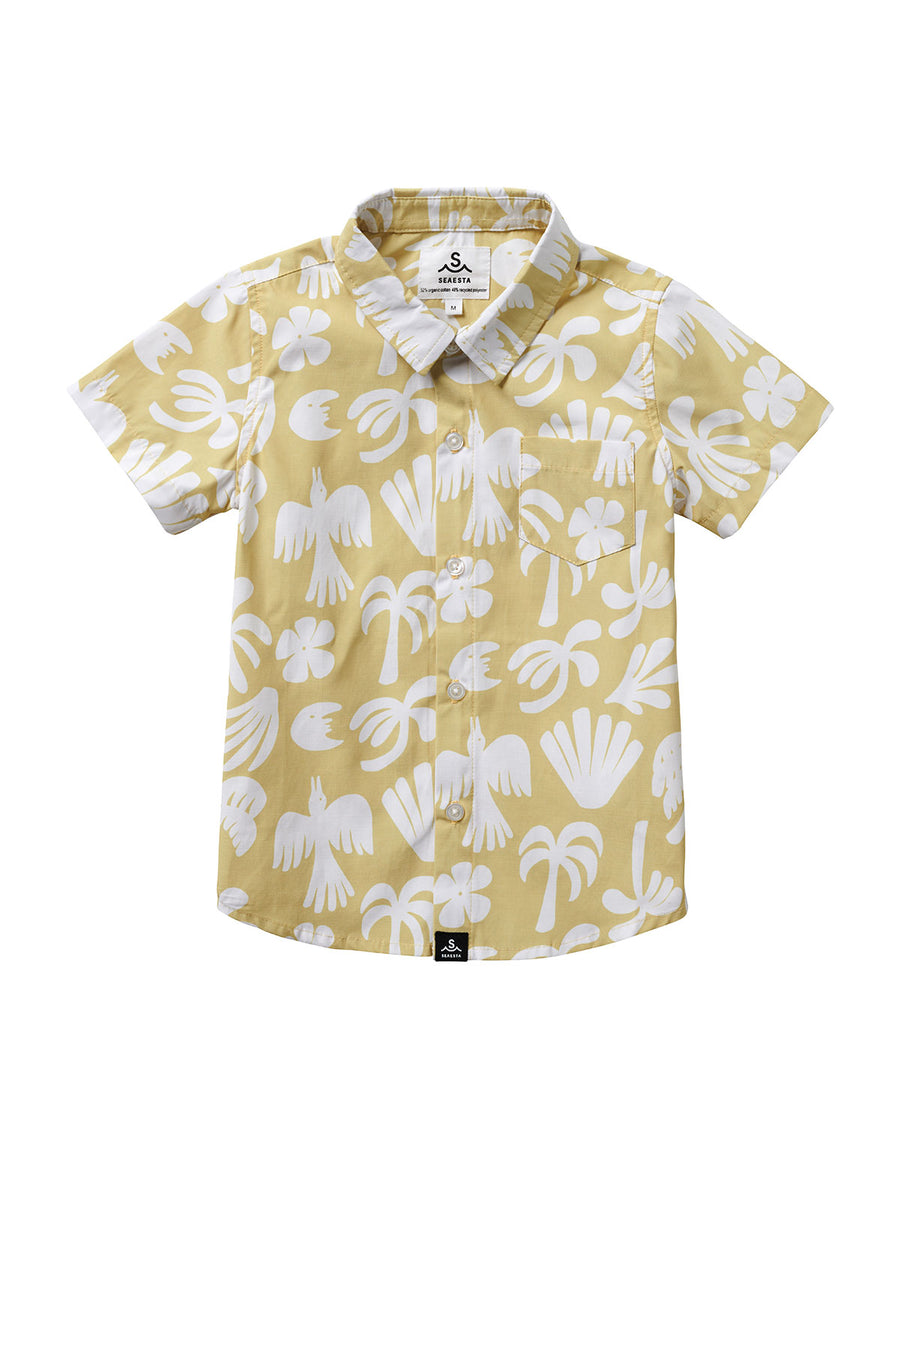 Seaesta Surf x Ty Williams Button Up Shirt / KIDS / Khaki